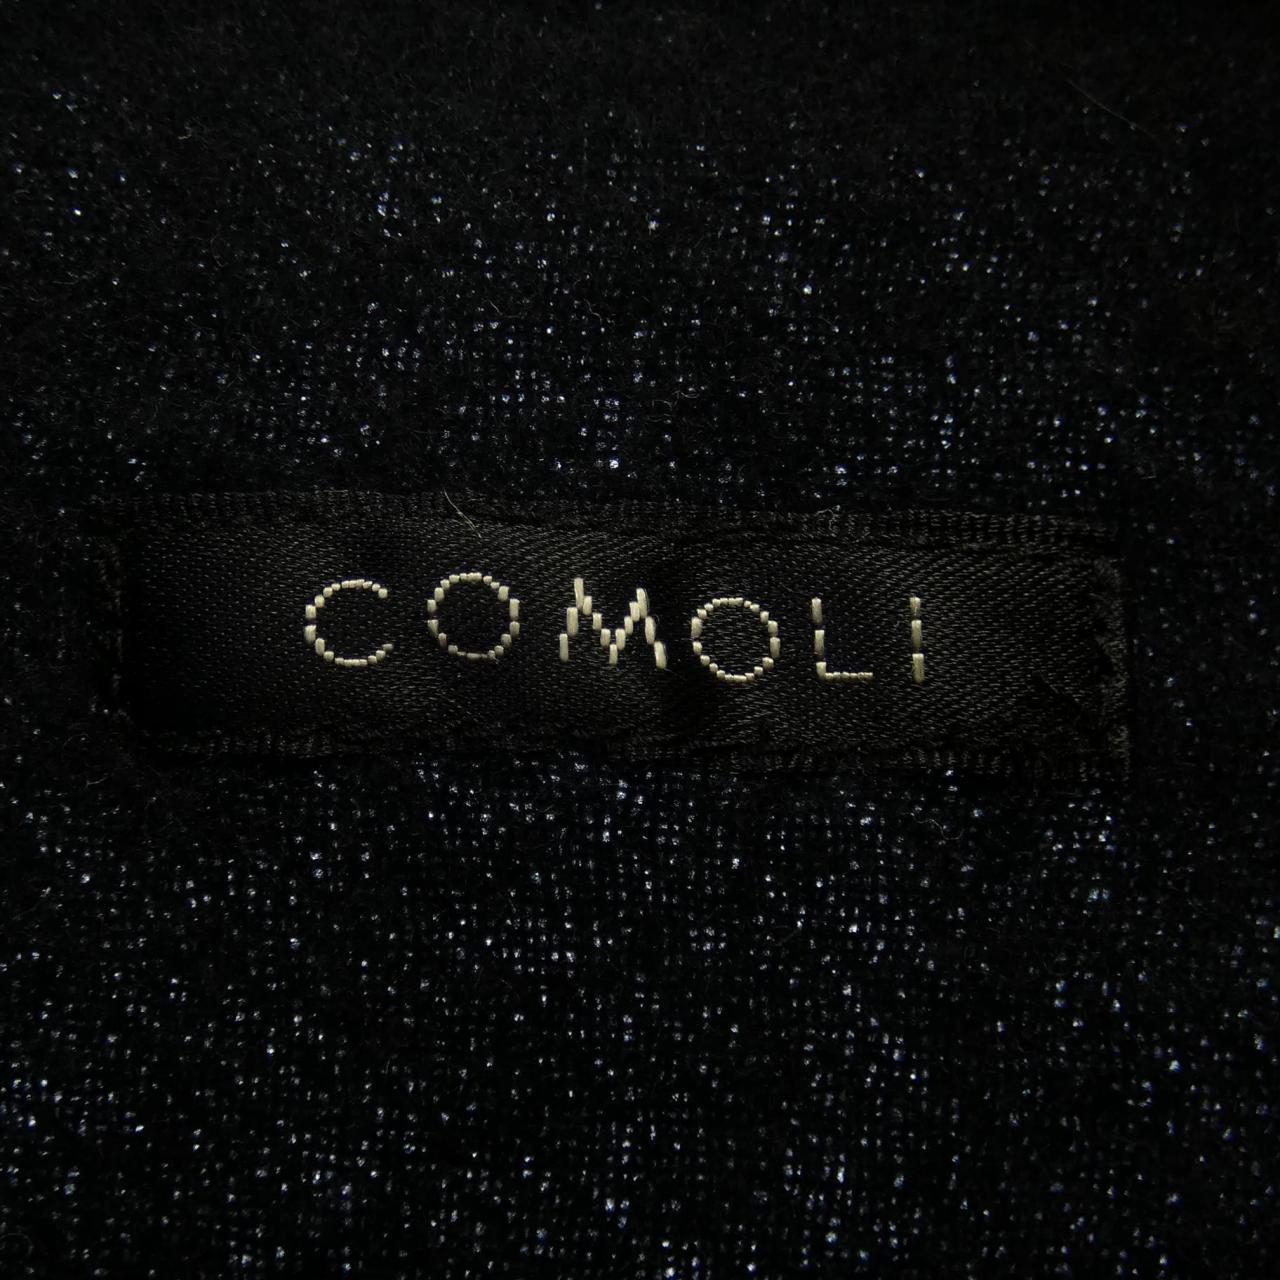 COMOLI tops